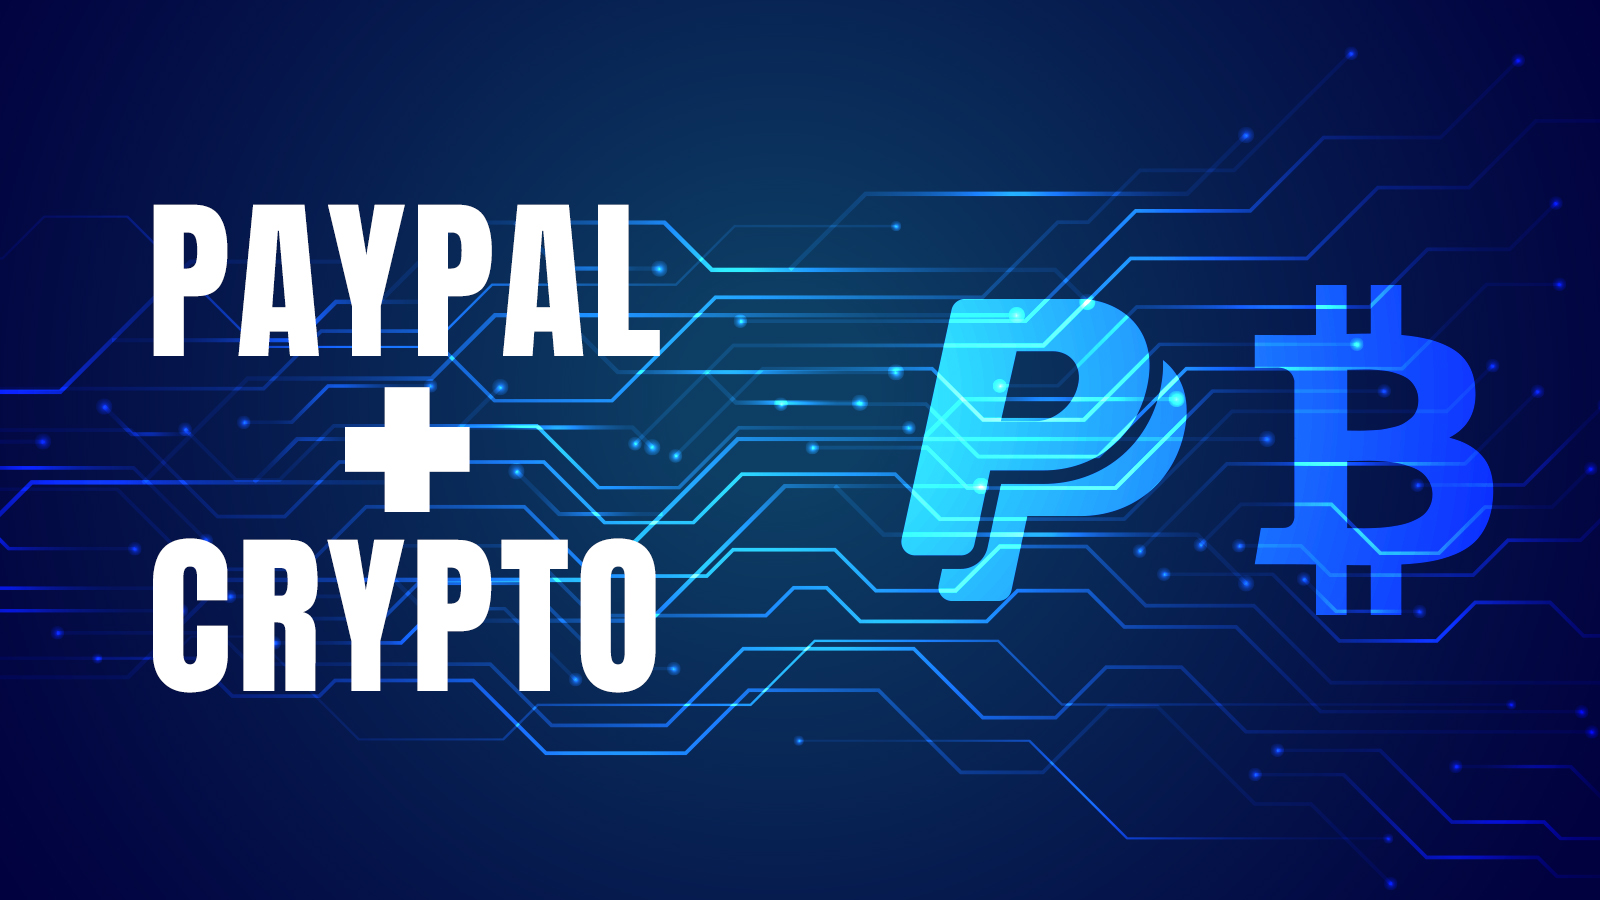 payal and bitcoin logo collide